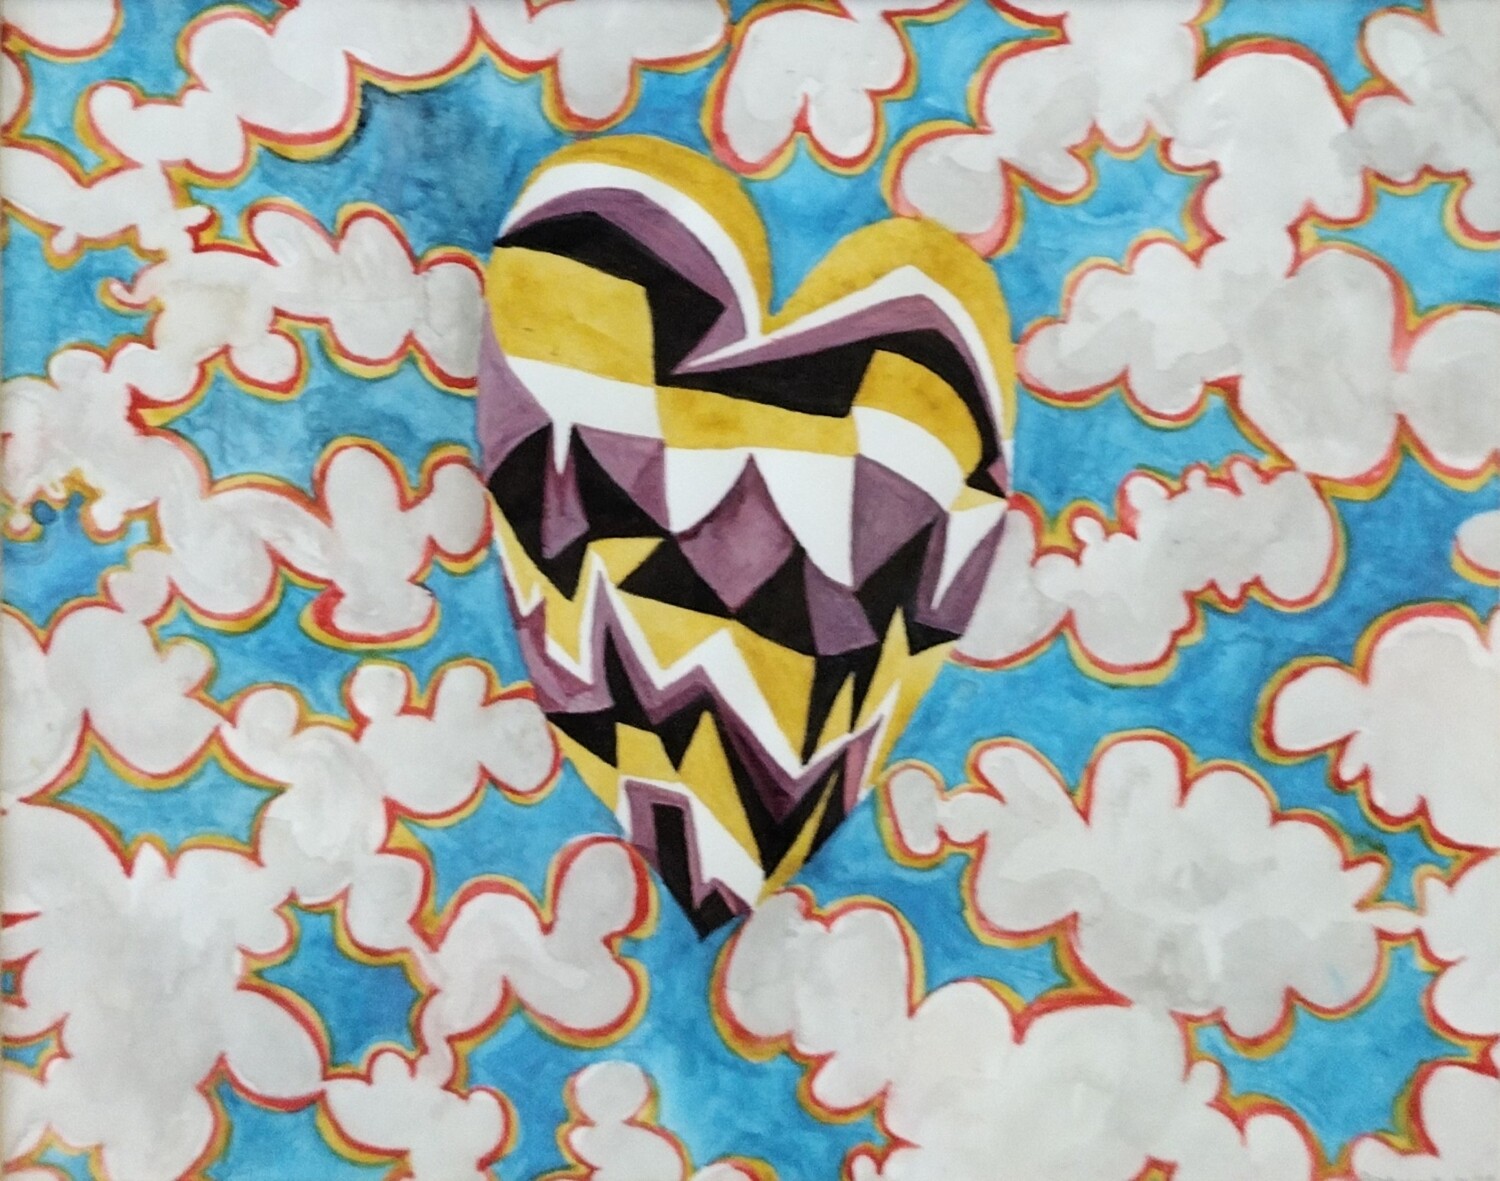 NonBinary Heart, Pan Sexual Sky - Original by Stieg Retlin